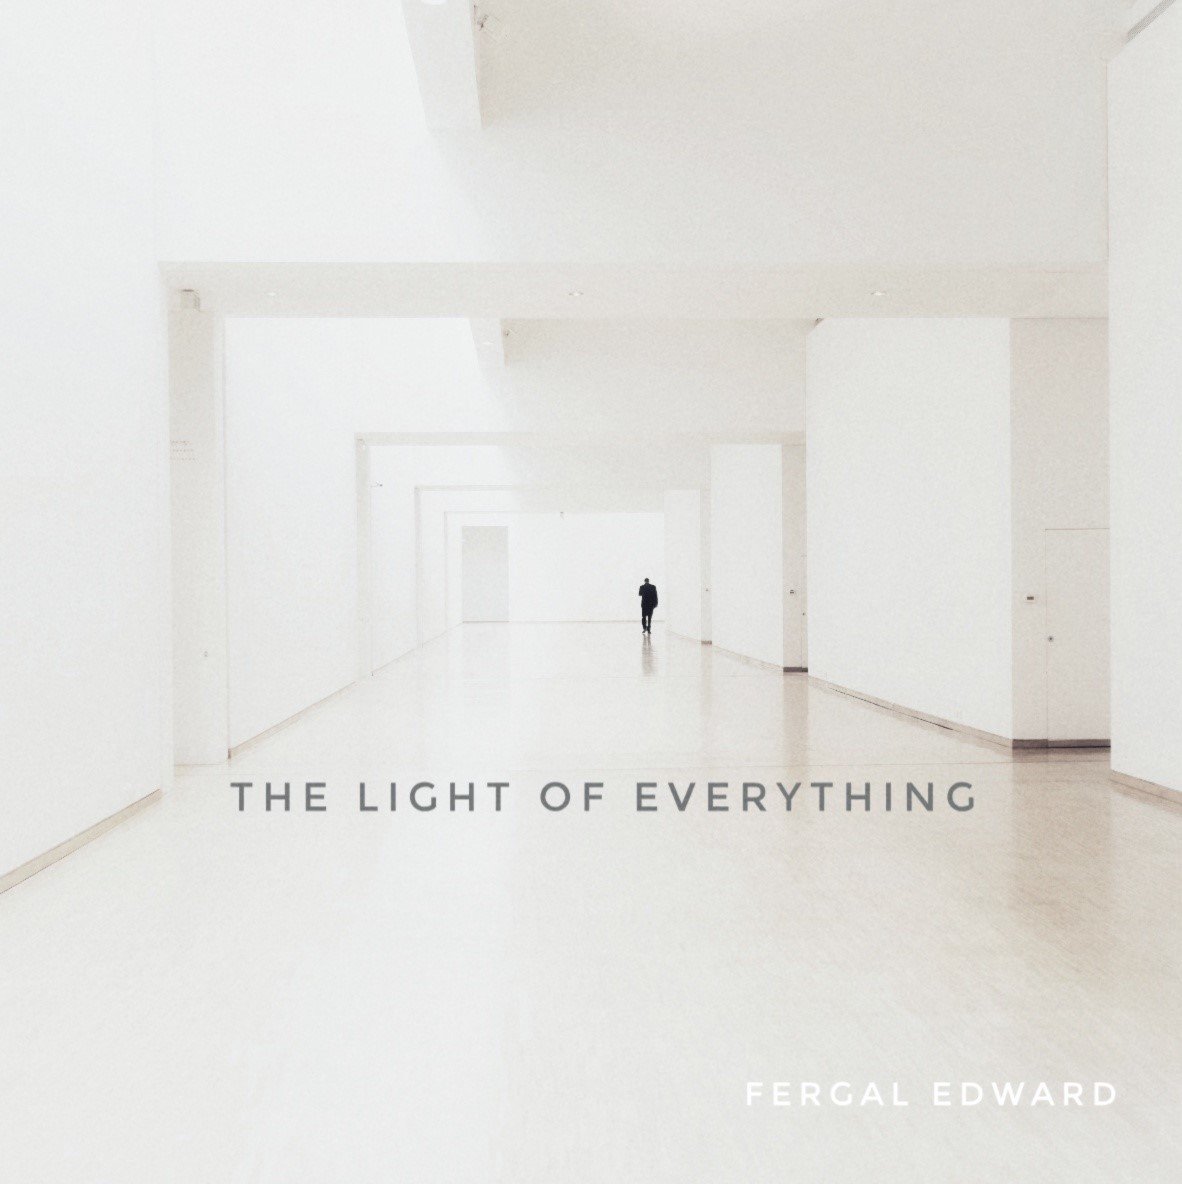 DUBLIN SINGER-SONGWRITER FERGAL EDWARD RETURNS WITH 'THE LIGHT OF EVERYTHING' EP - ventsmagazine.com/2020/06/22/dub…